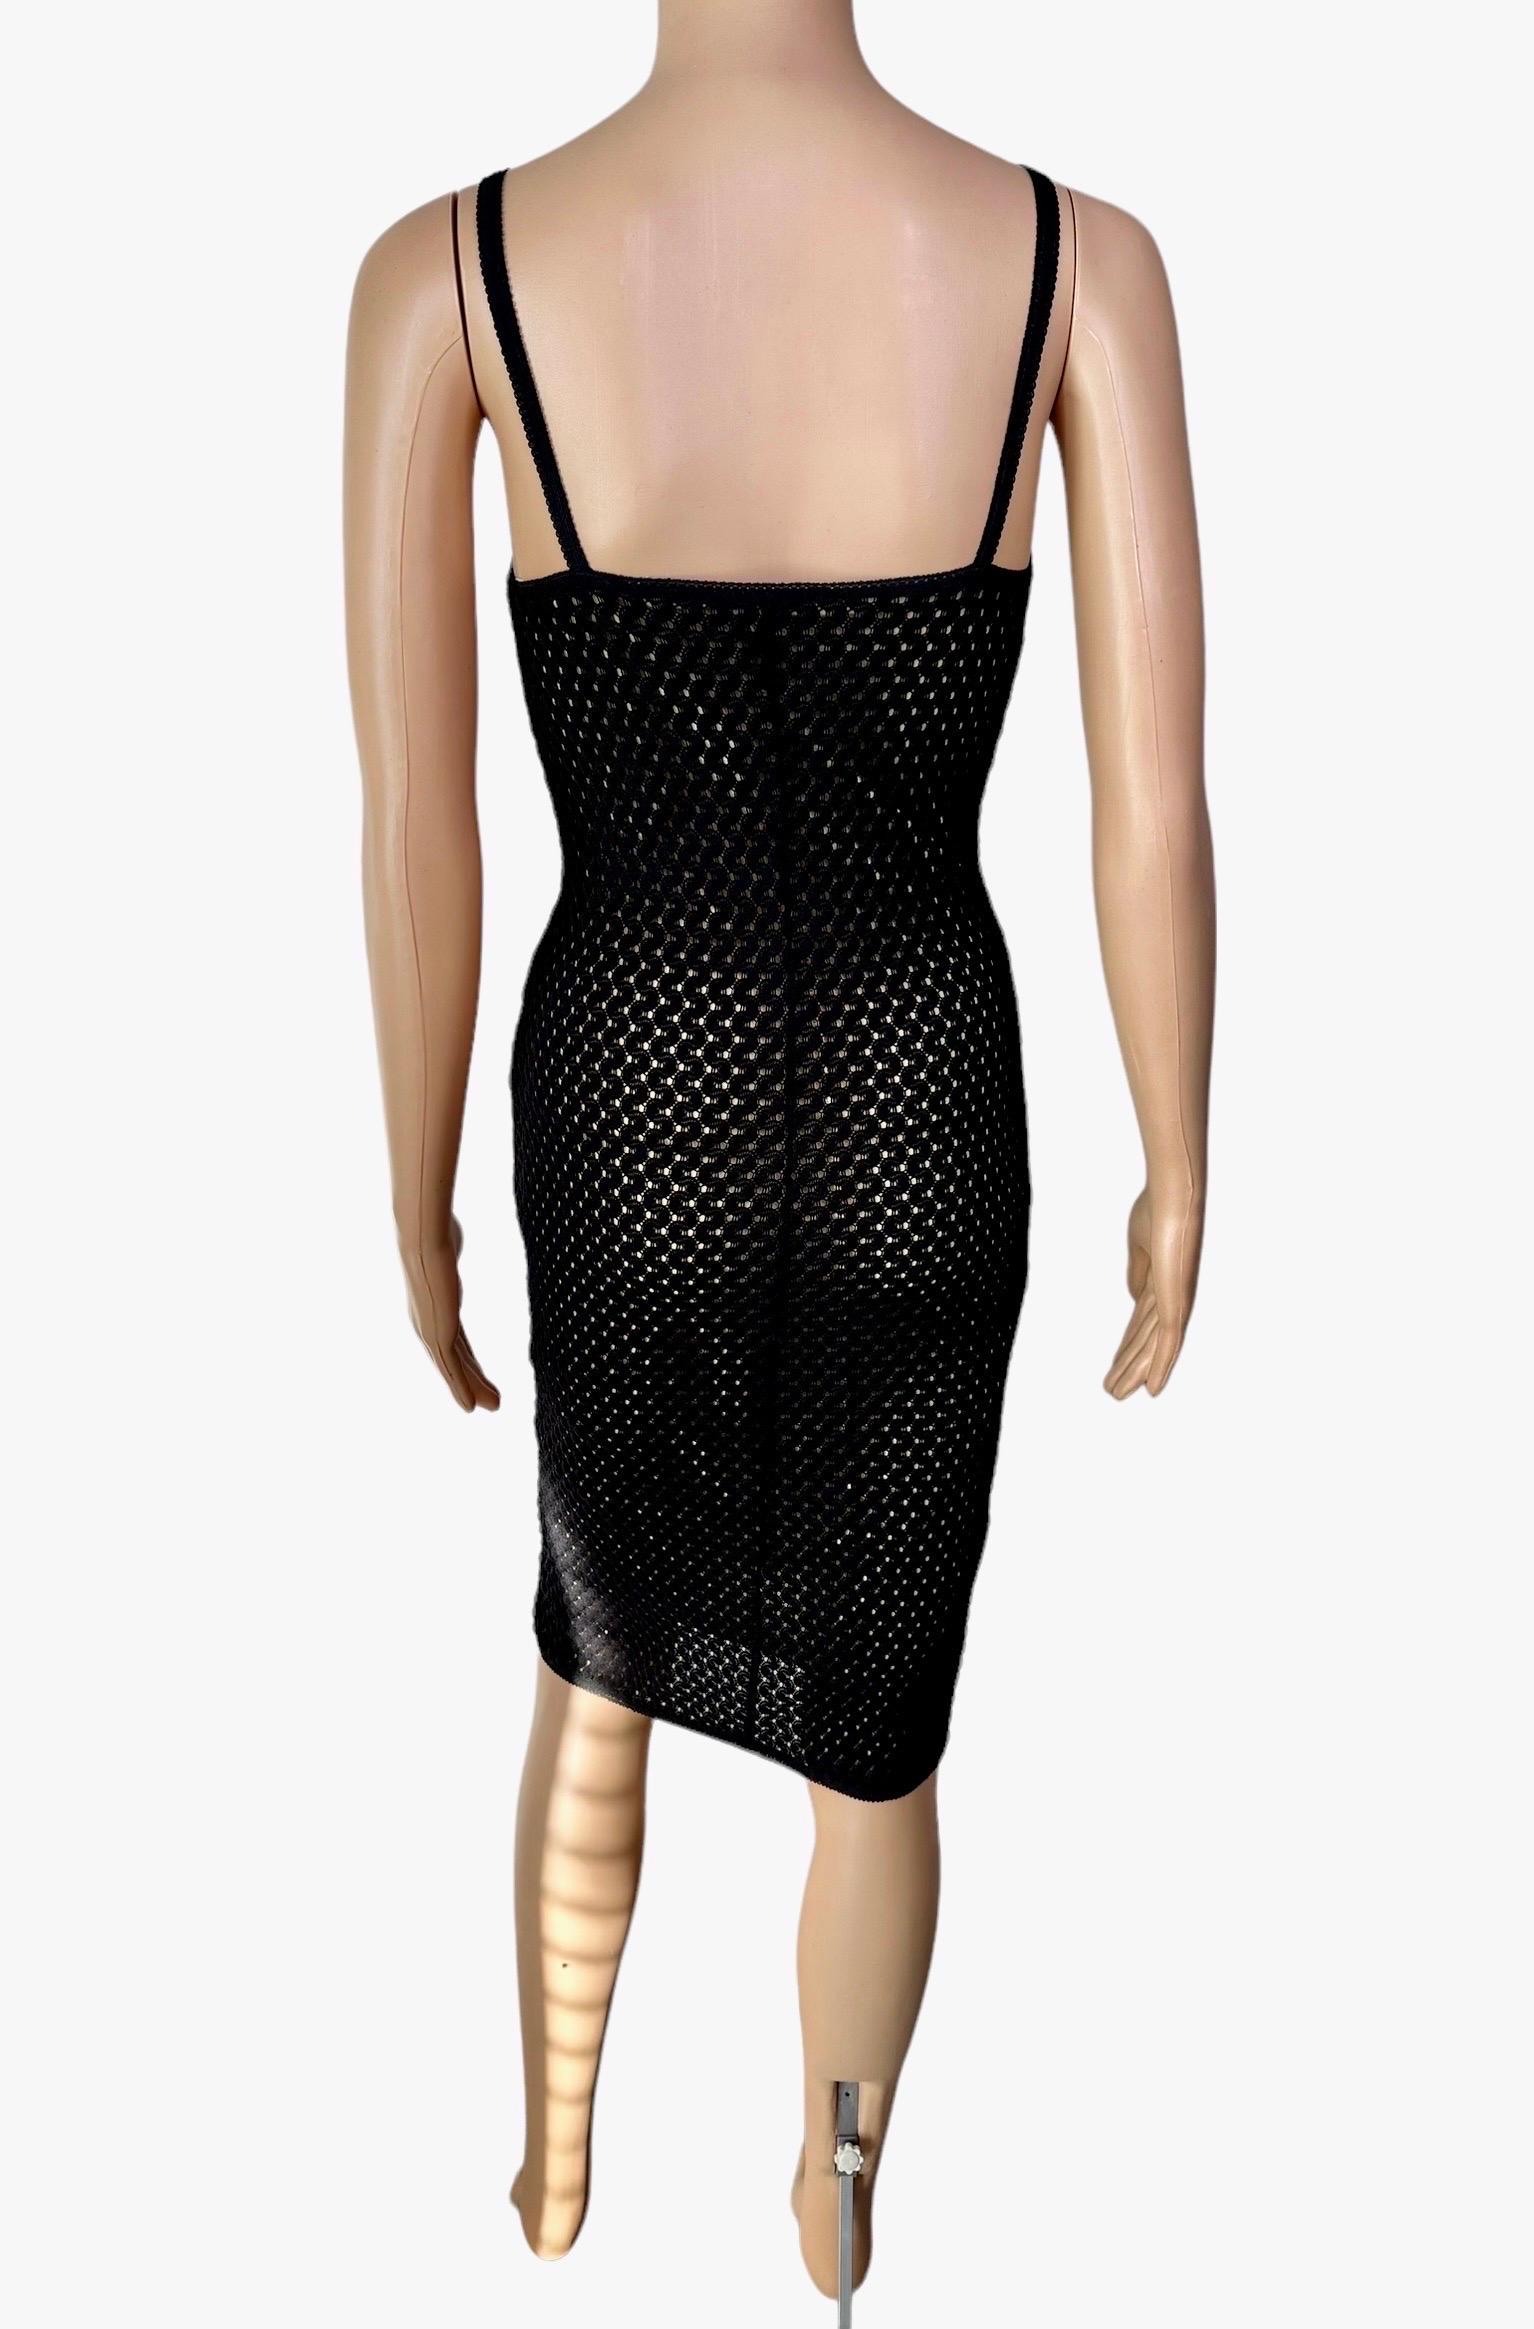 D&G by Dolce & Gabbana 1990's Sheer Knit Fishnet Virgin Mary Charm Black Dress For Sale 1